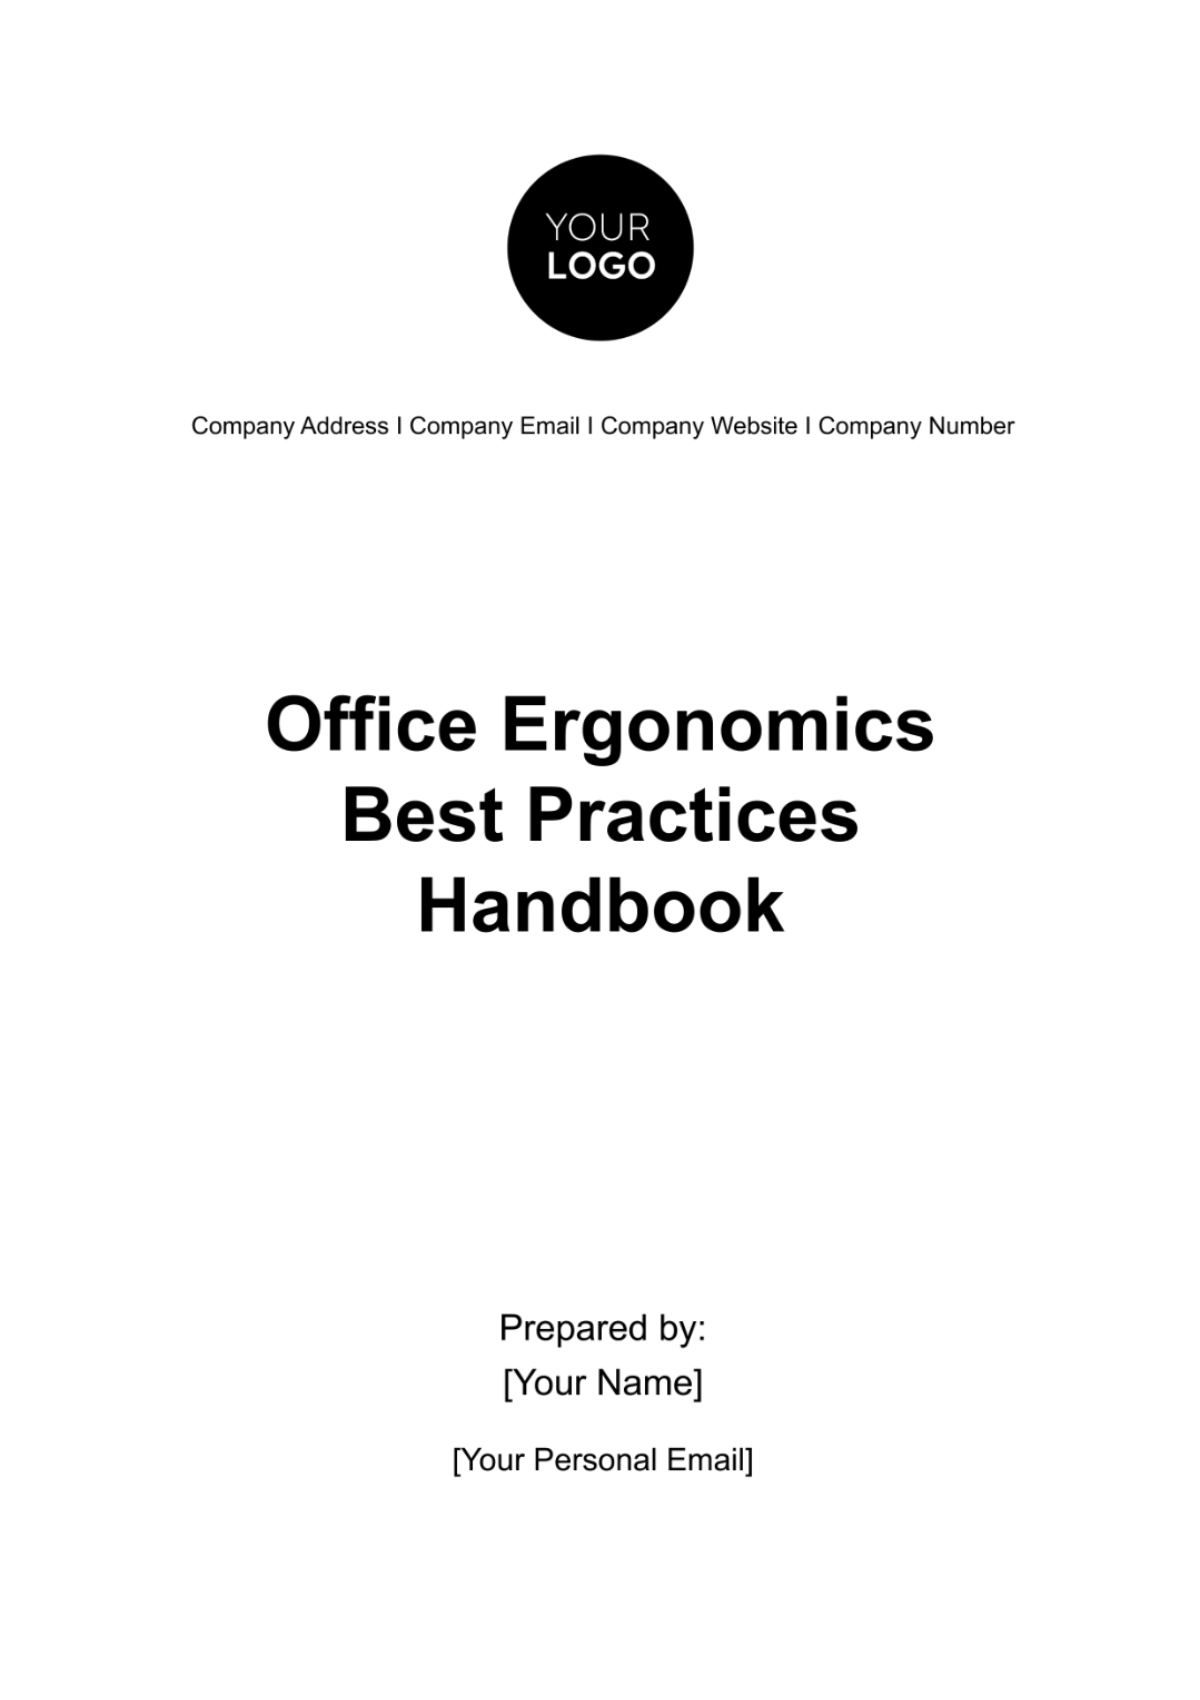 Free Office Ergonomics Best Practices Handbook HR Template